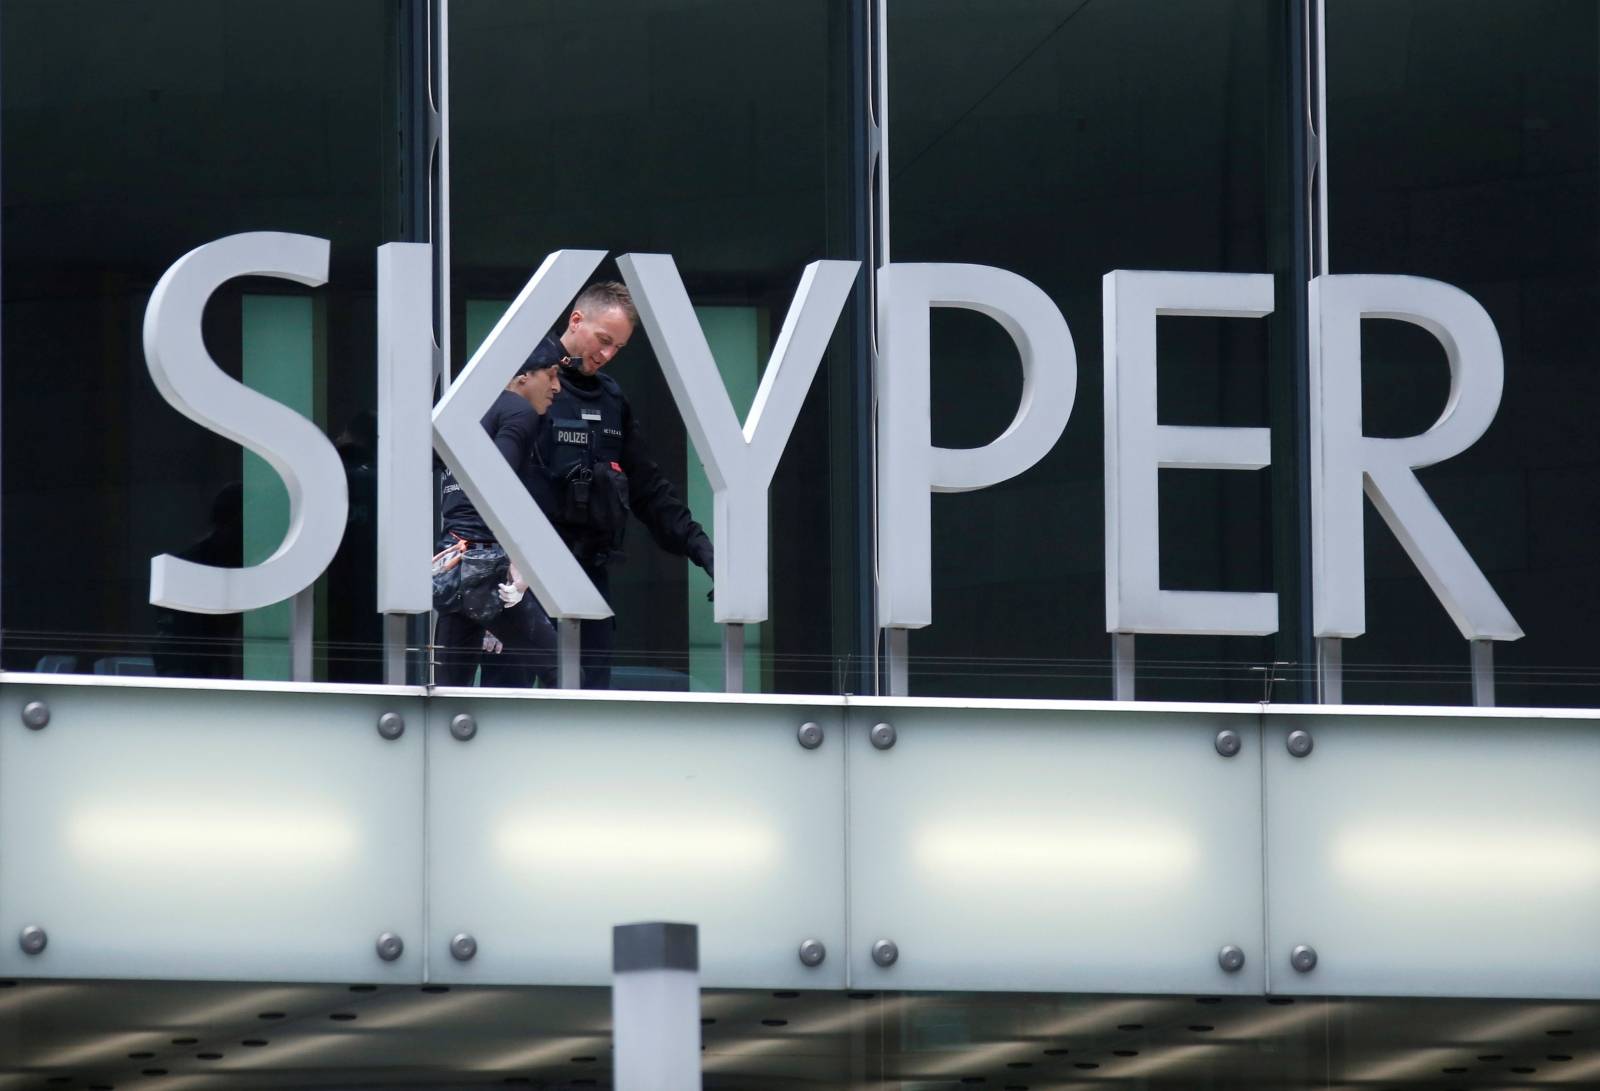 French urban climber Alain Robert climbs the Skyper building in Frankfurt